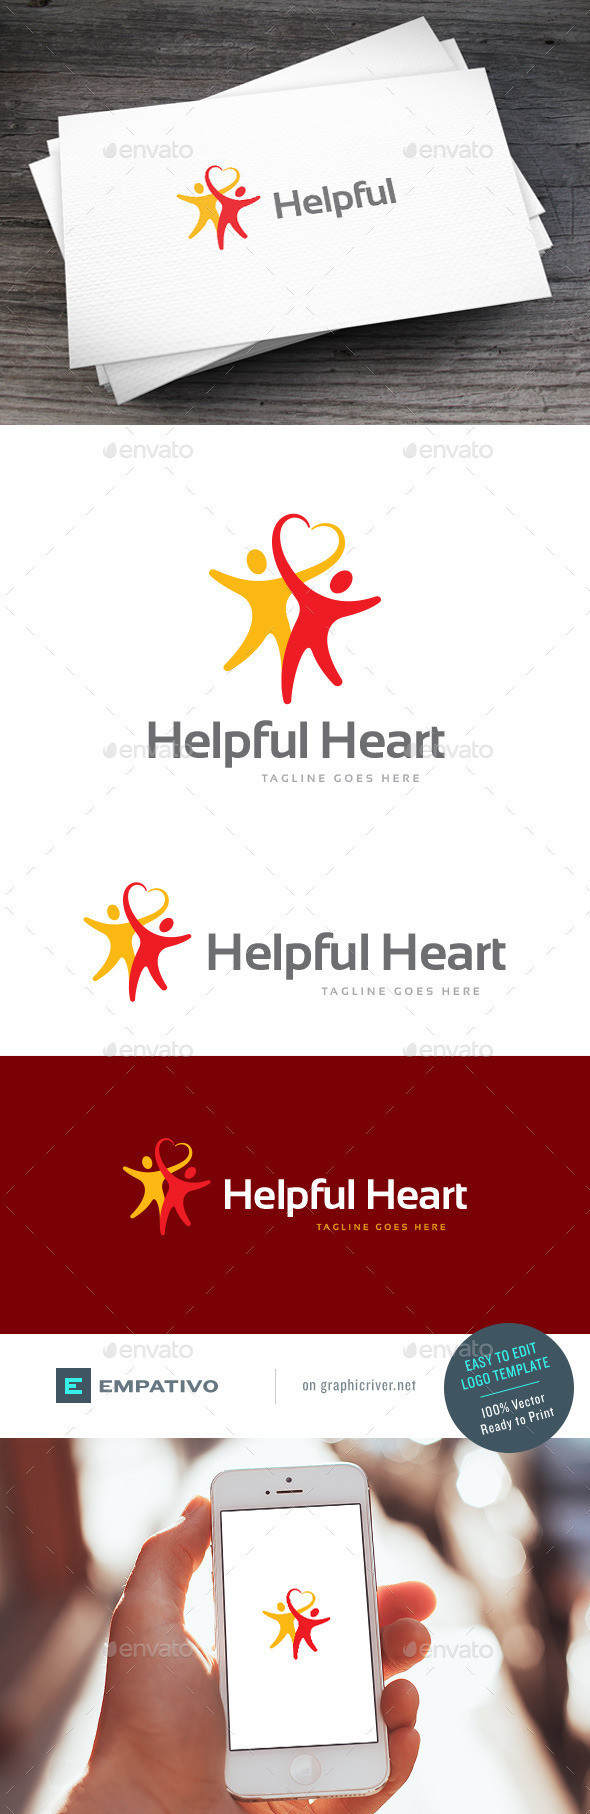 Helpful heart logo template